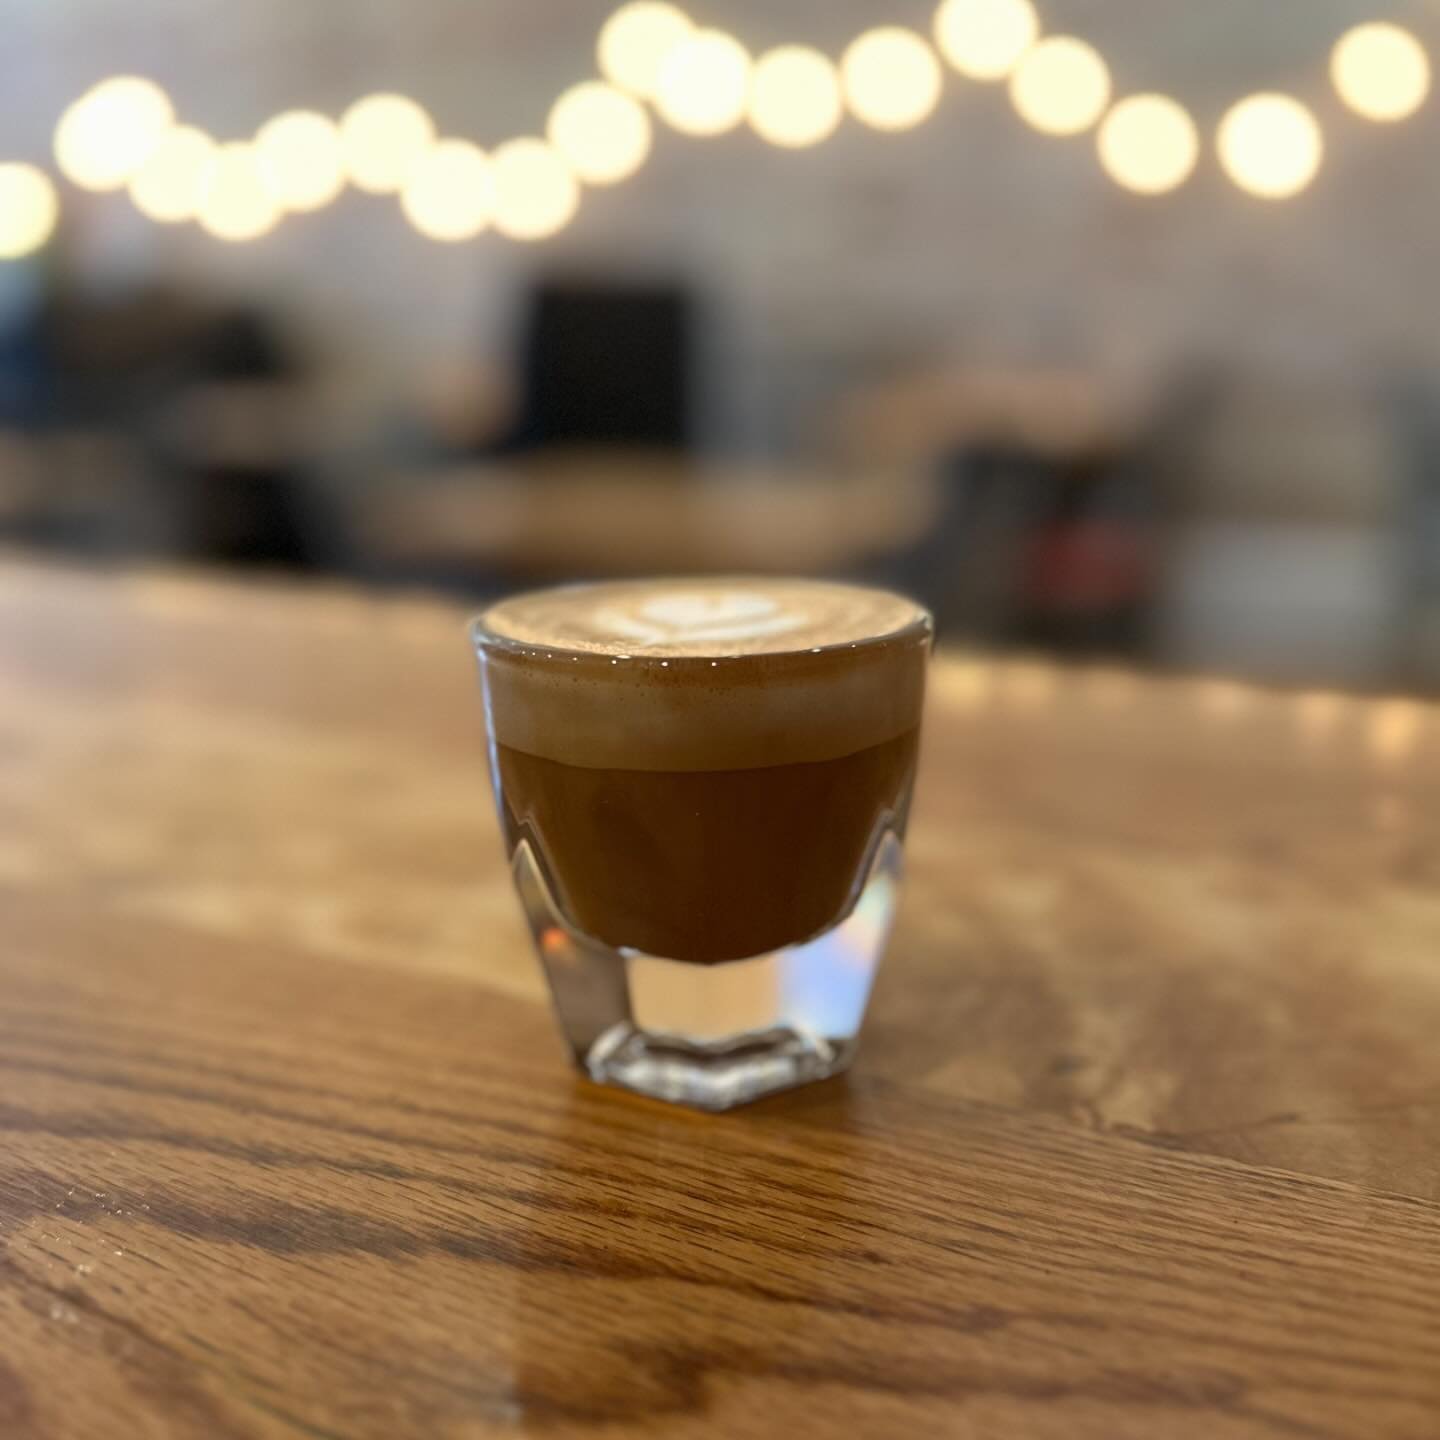 Cortado.  A perfect amount of espresso and milk &mdash; equal parts of both. A Spanish drink you can enjoy in Petoskey! 🇪🇸💛

@northperkcoffee @notneutral #cortado #latteart #coffeeshop #localcoffee #latteart #petoskey @downtownpetoskey #batista